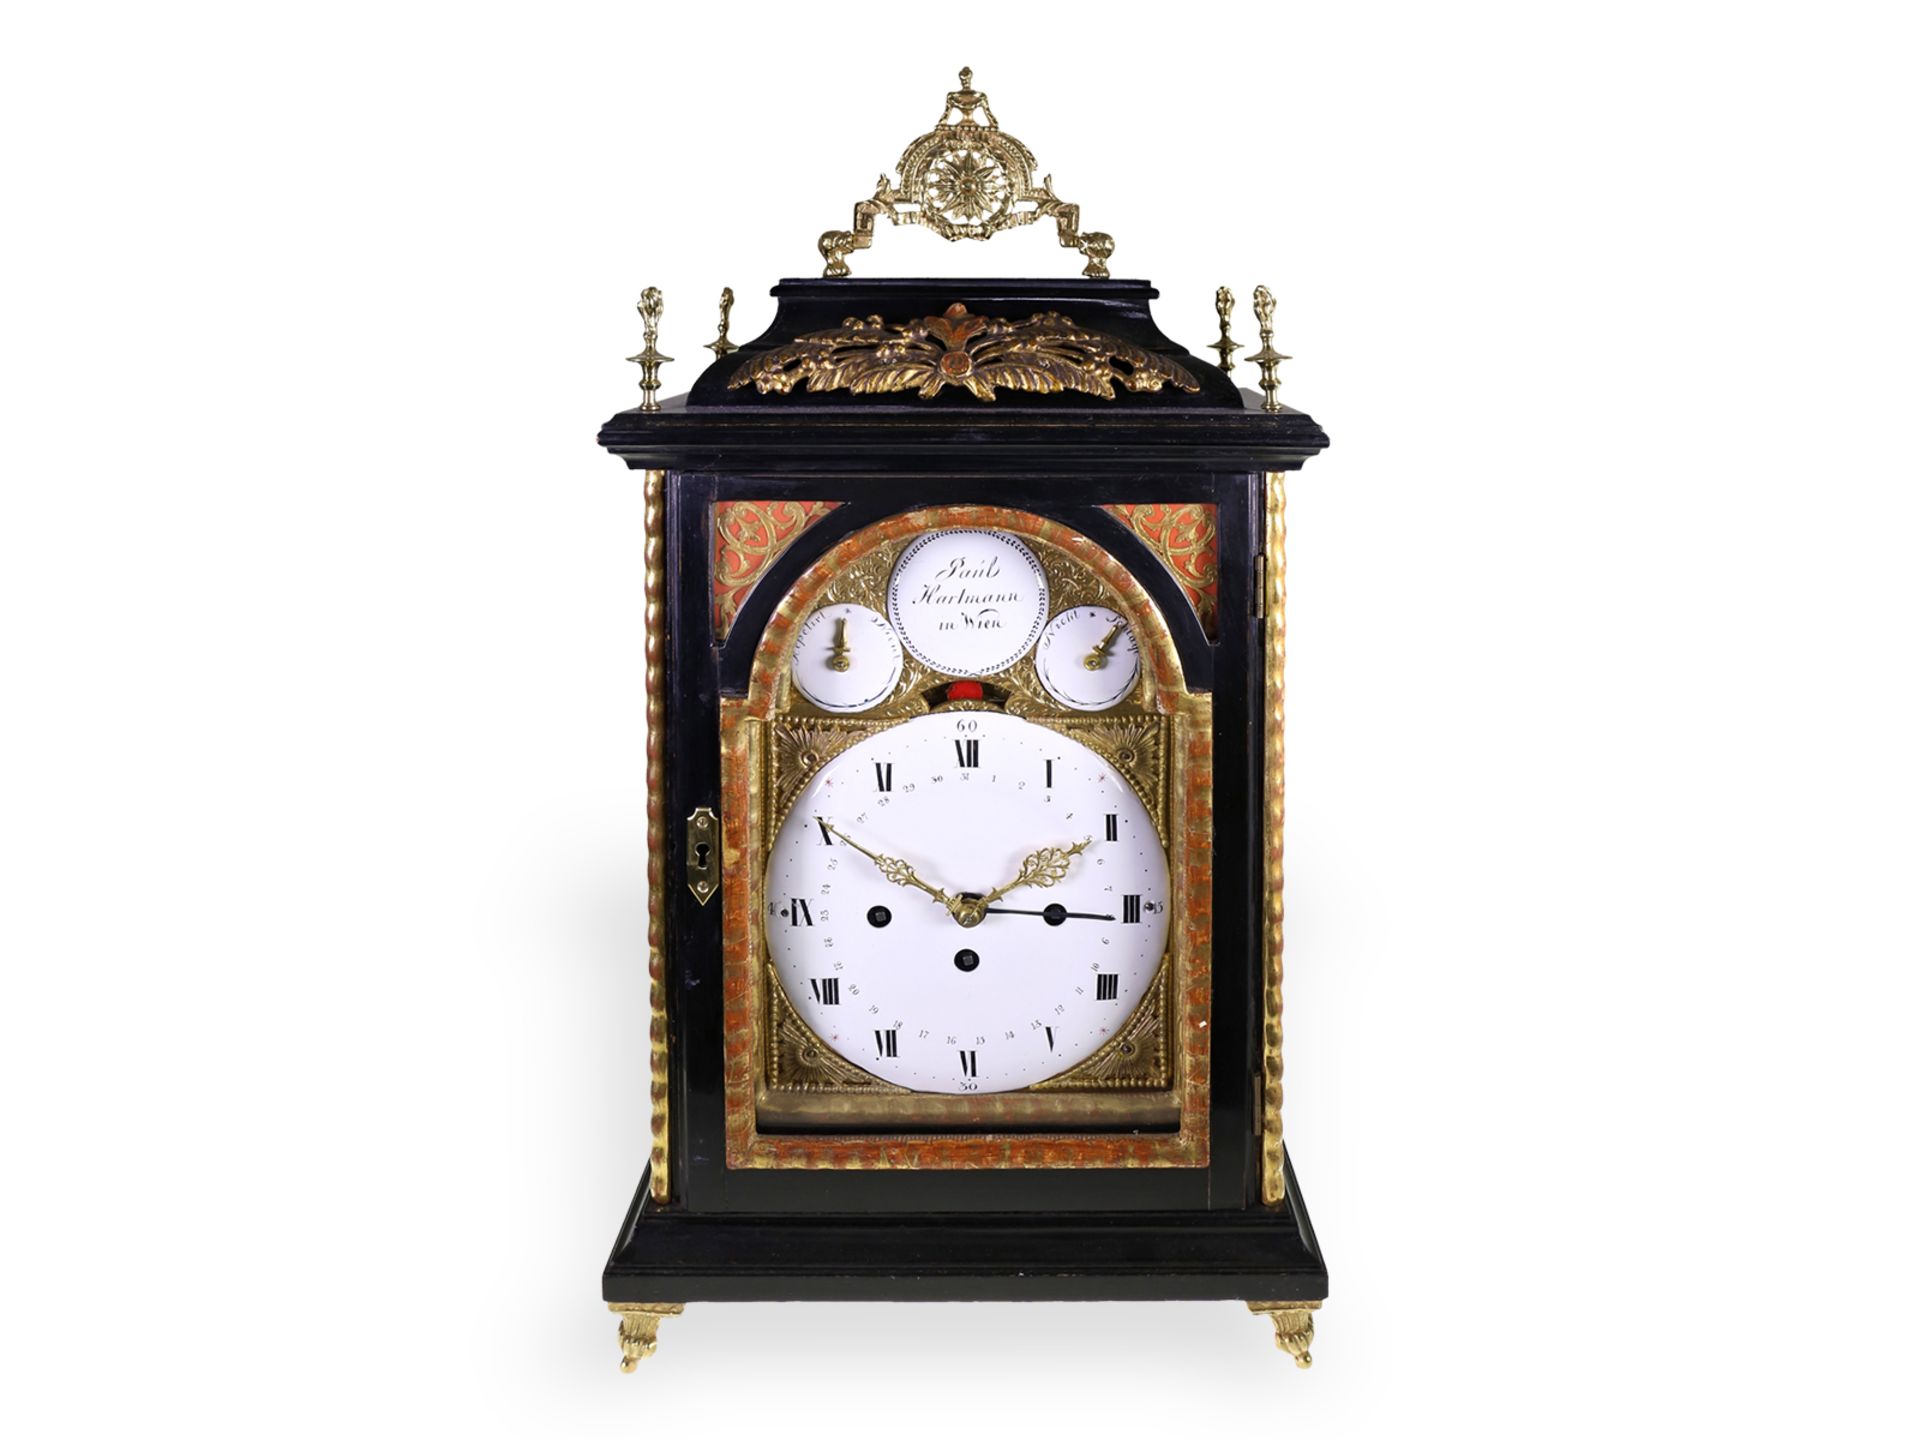 Table clock: intricate Viennese Baroque clock "Paul Hartmann Vienna" around 1780